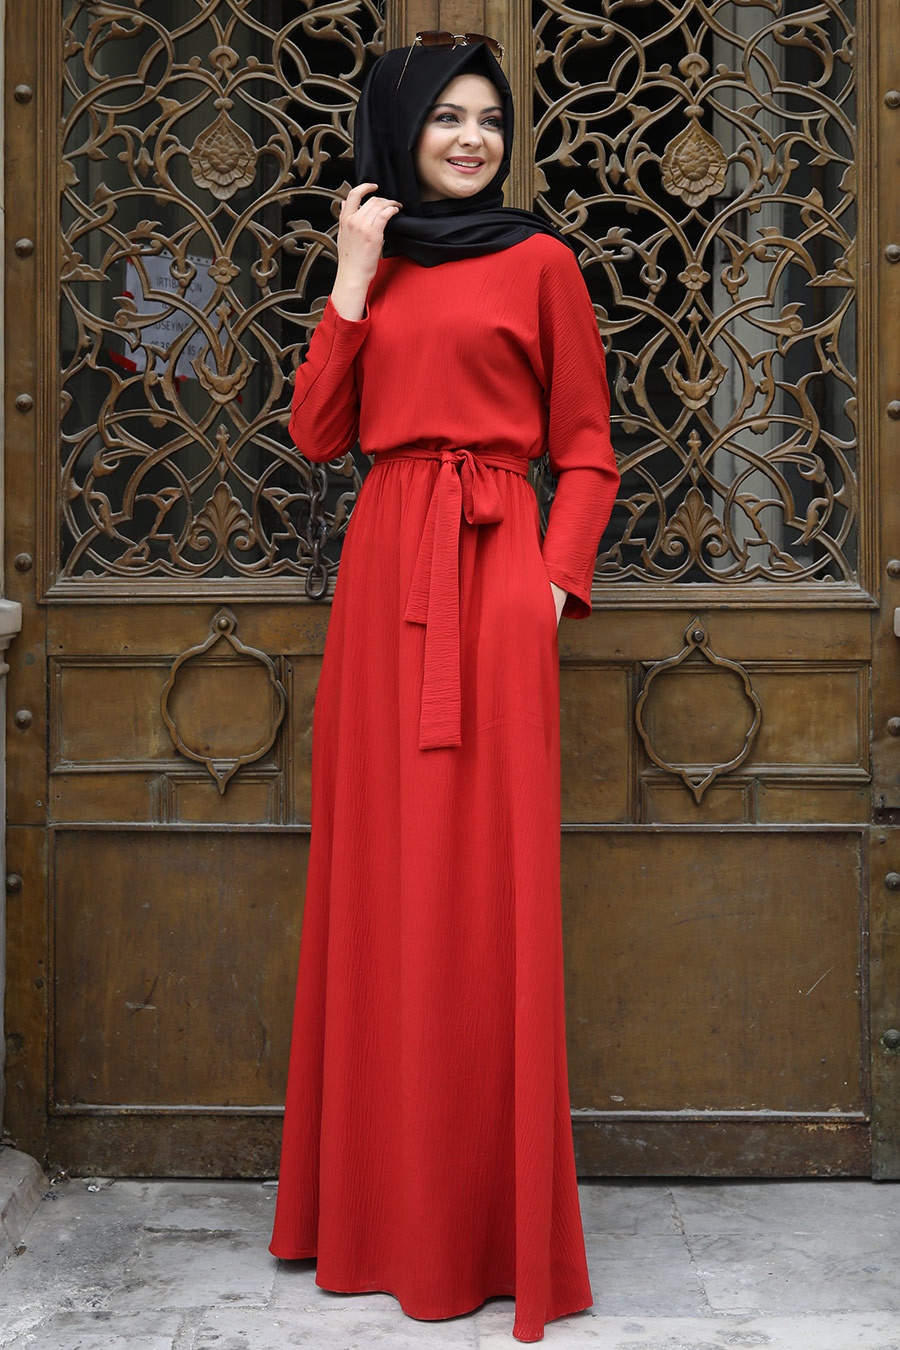 Pınar Şems - Renk Elbise - Kiremit